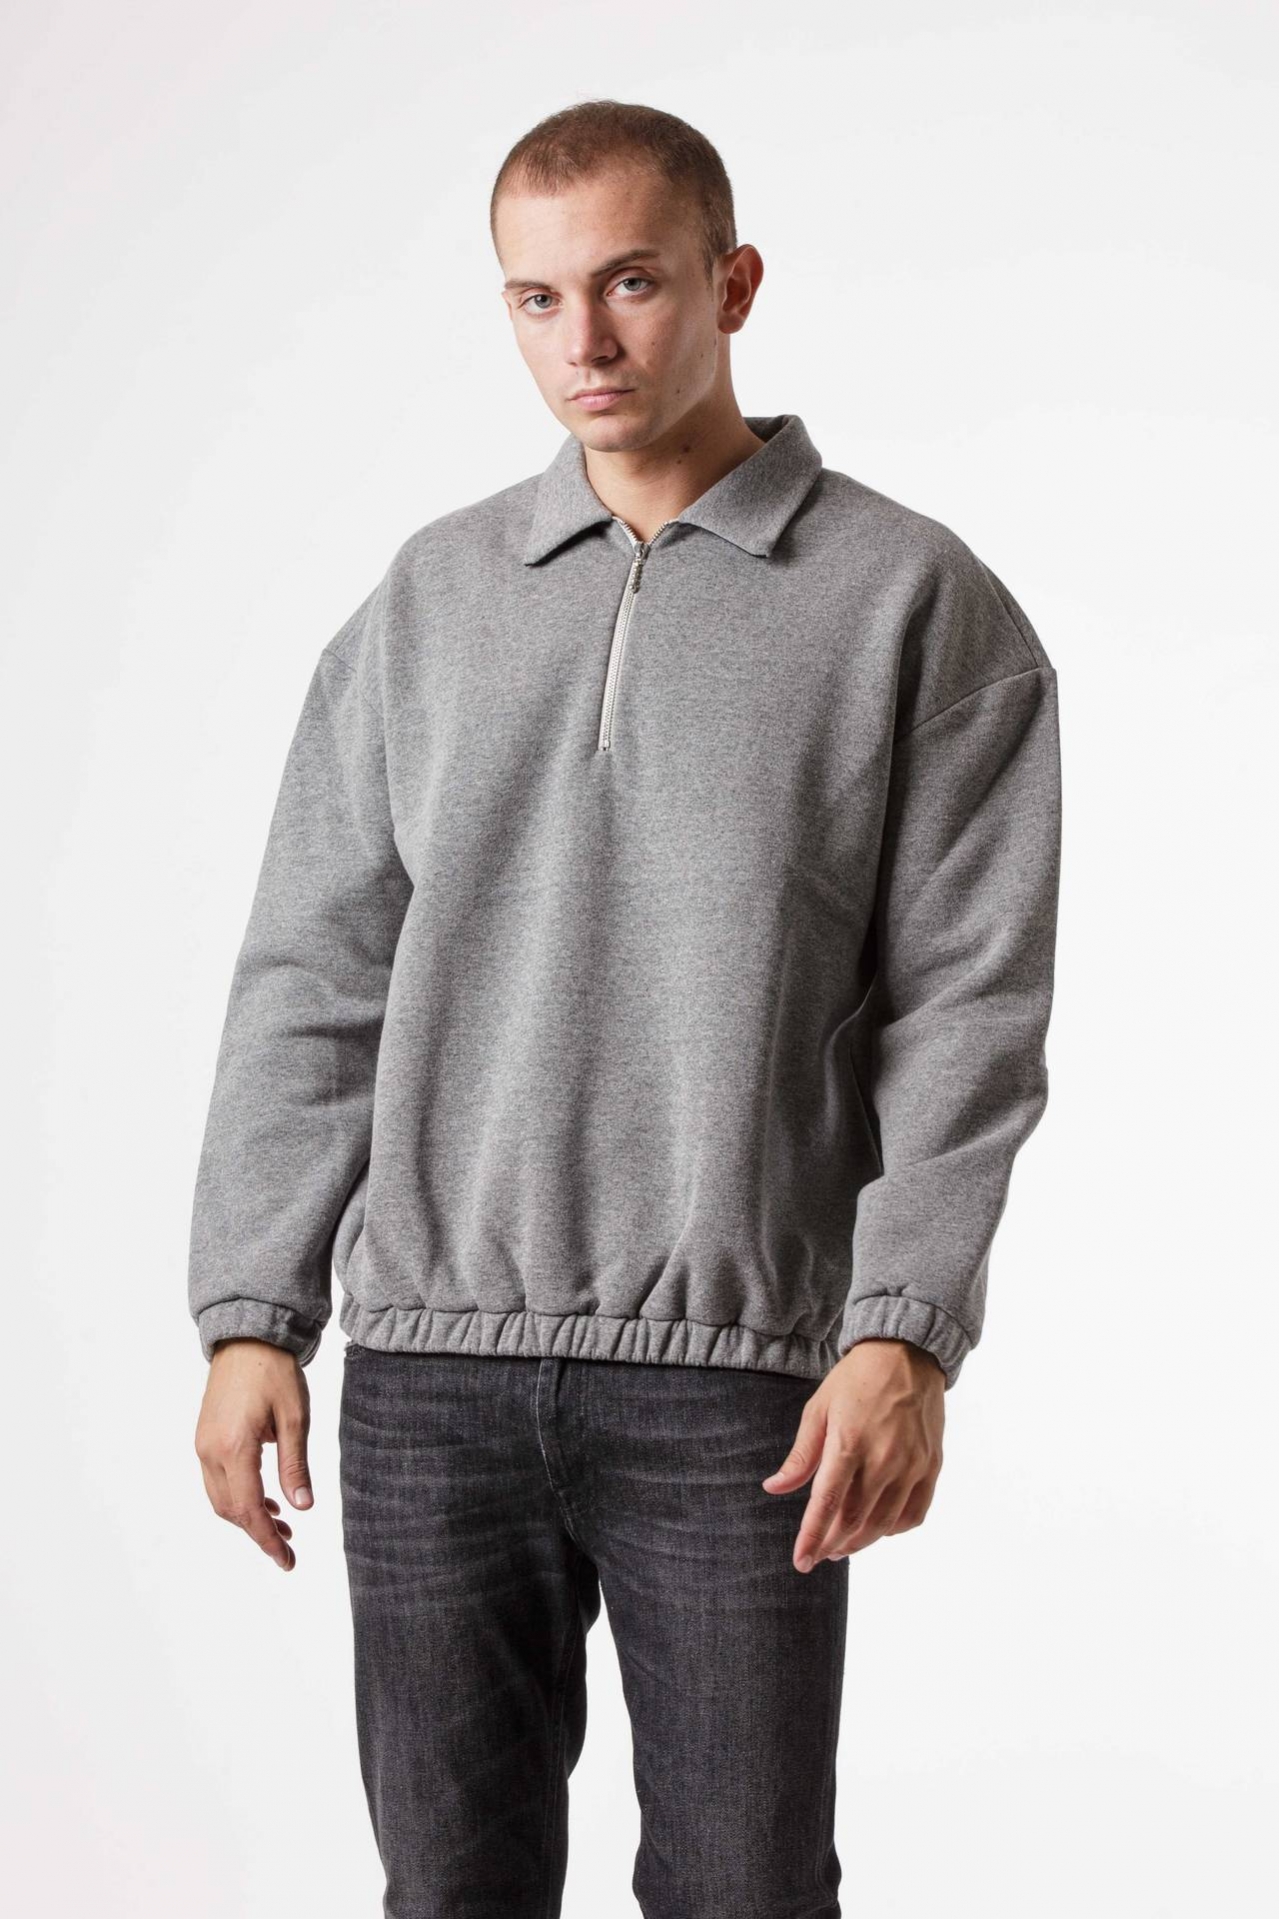 Cotton sweatshirt